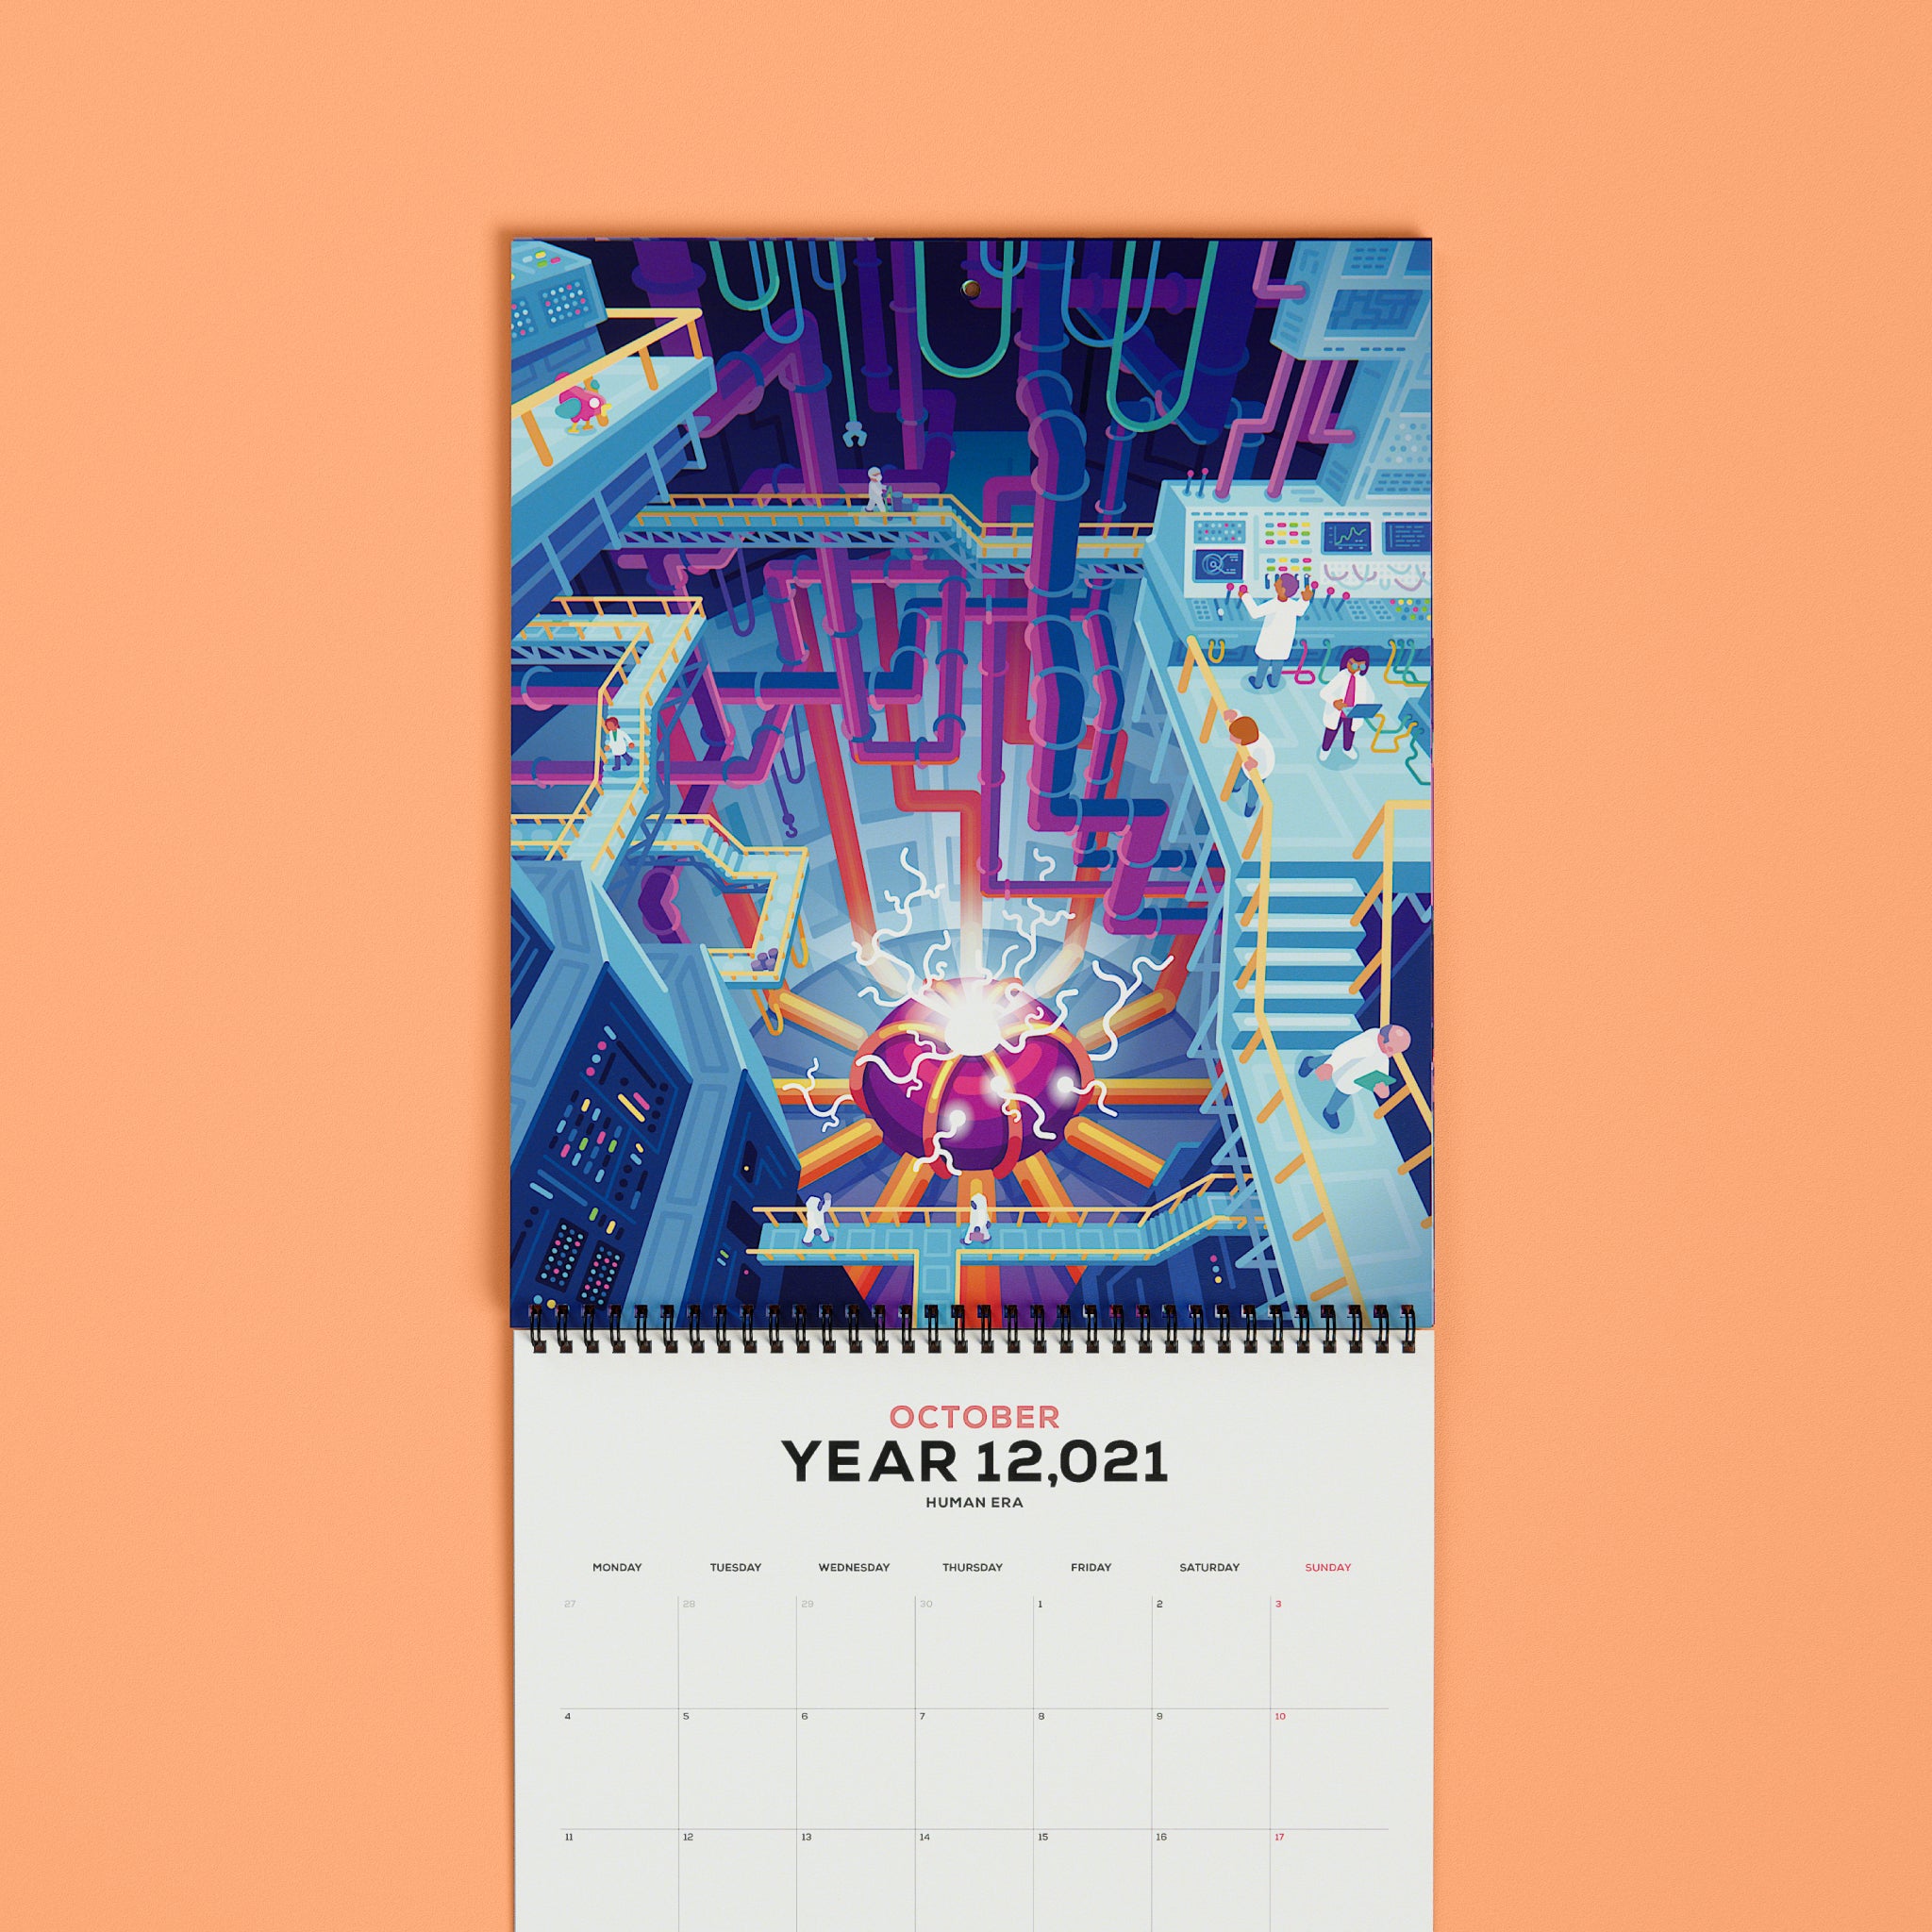 12,021 Human Era Calendar in a nutshell kurzgesagt